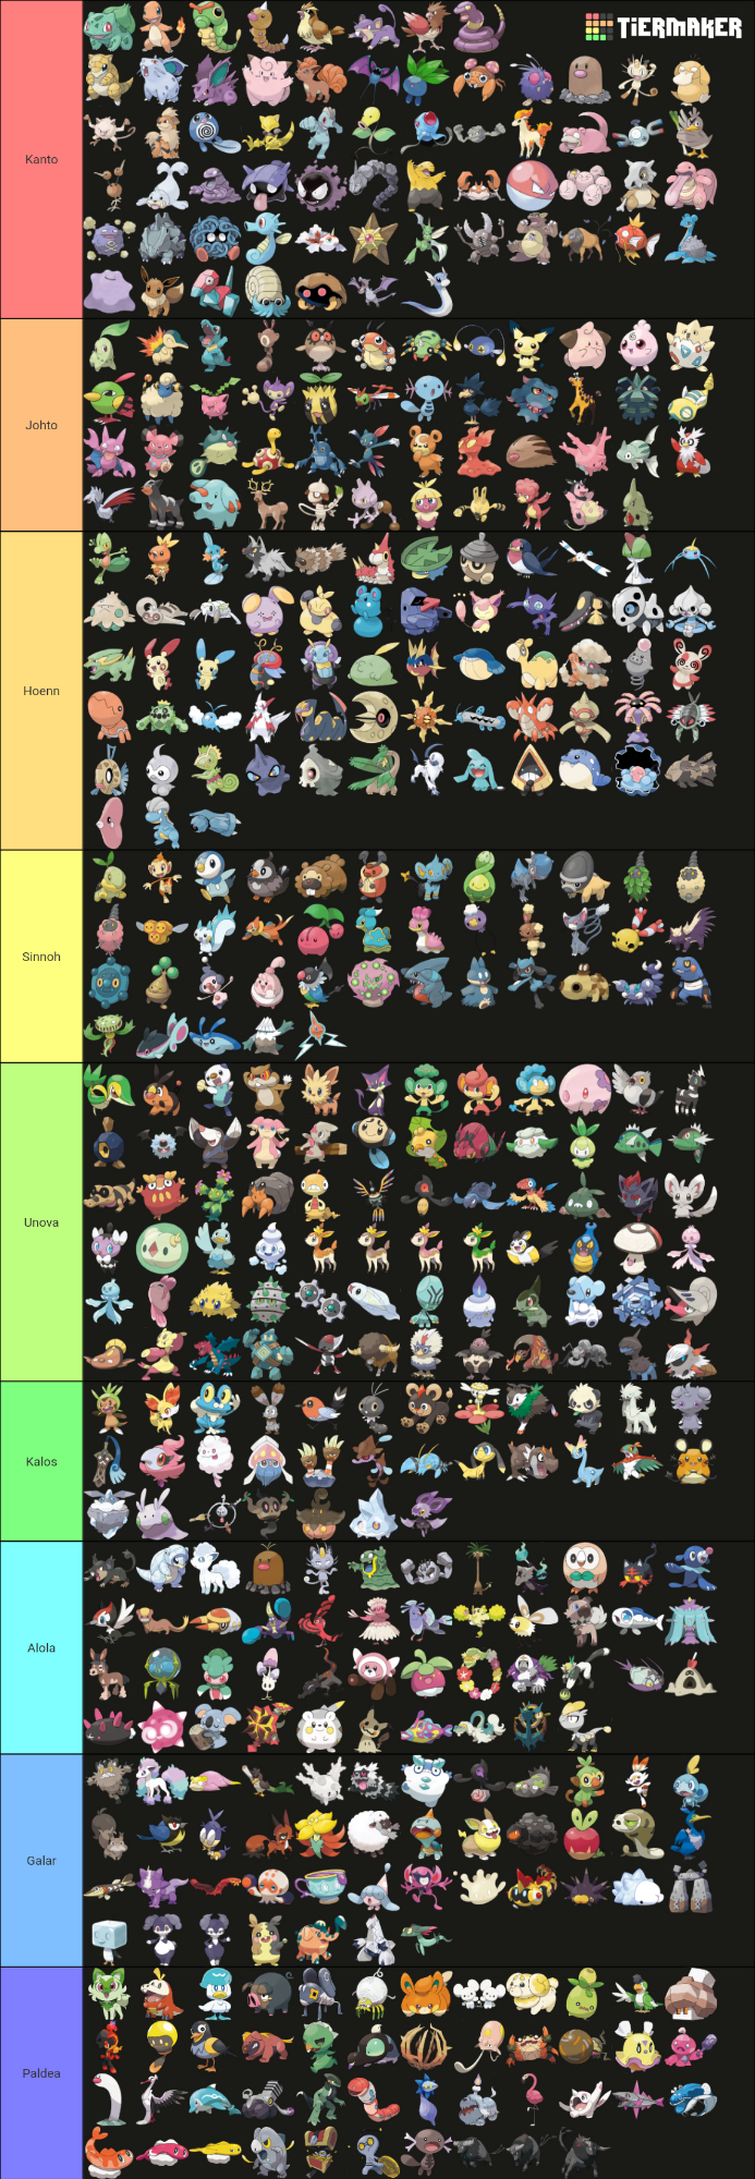 Pokémon Tier List 2: Kanto Region Tier List